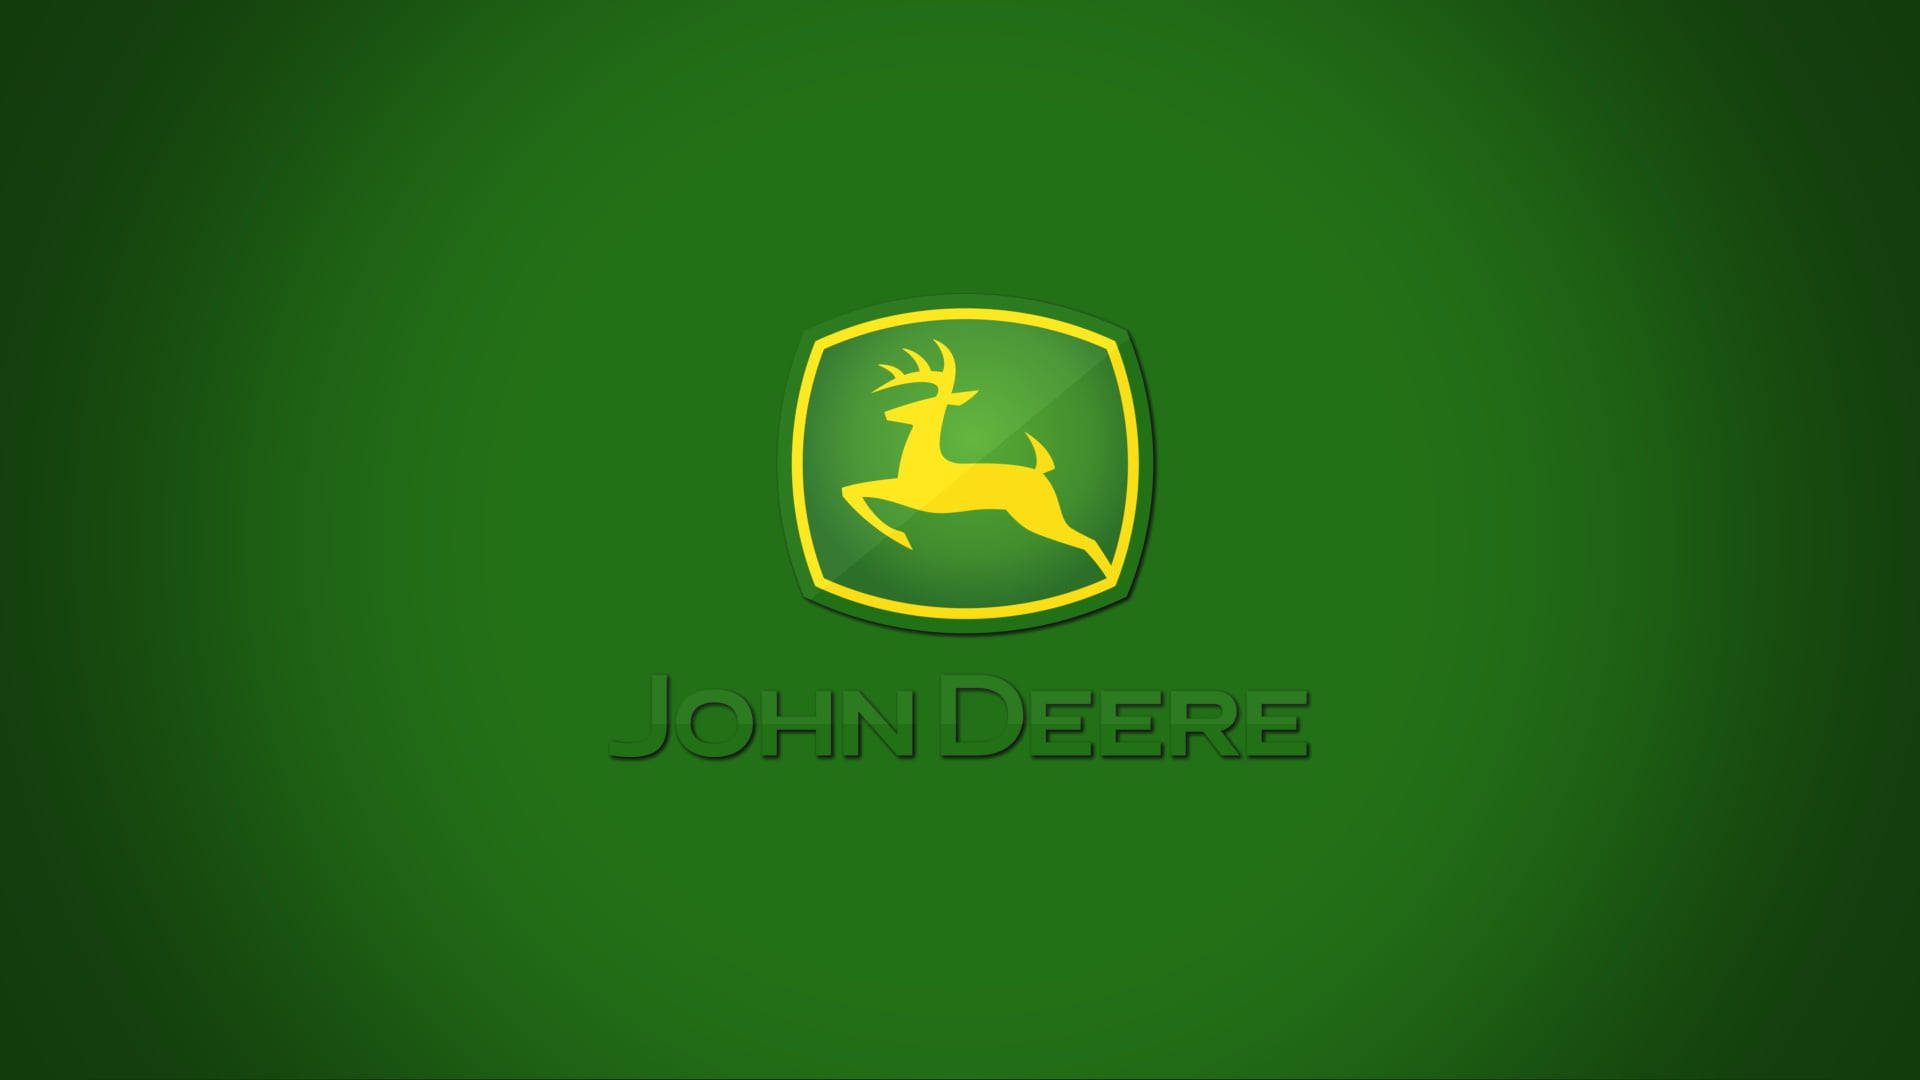 john deere logo wallpaper